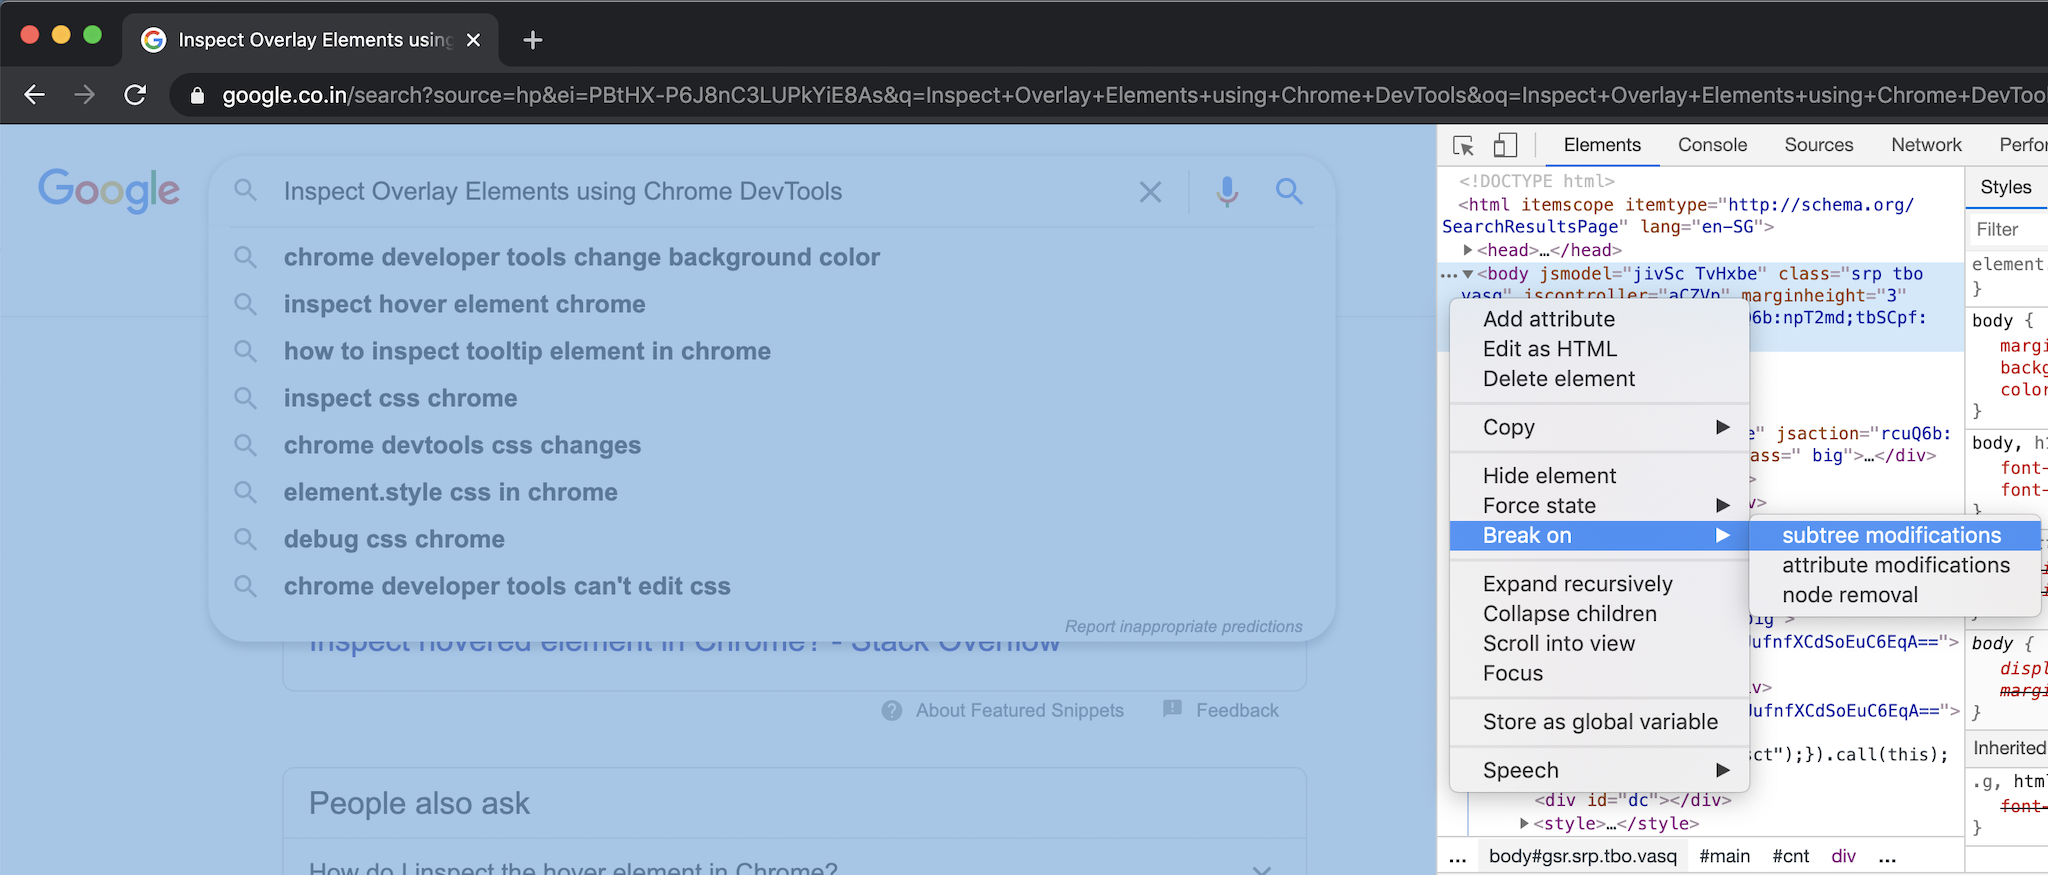 Chrome DevTool Break on Subtree Modifications